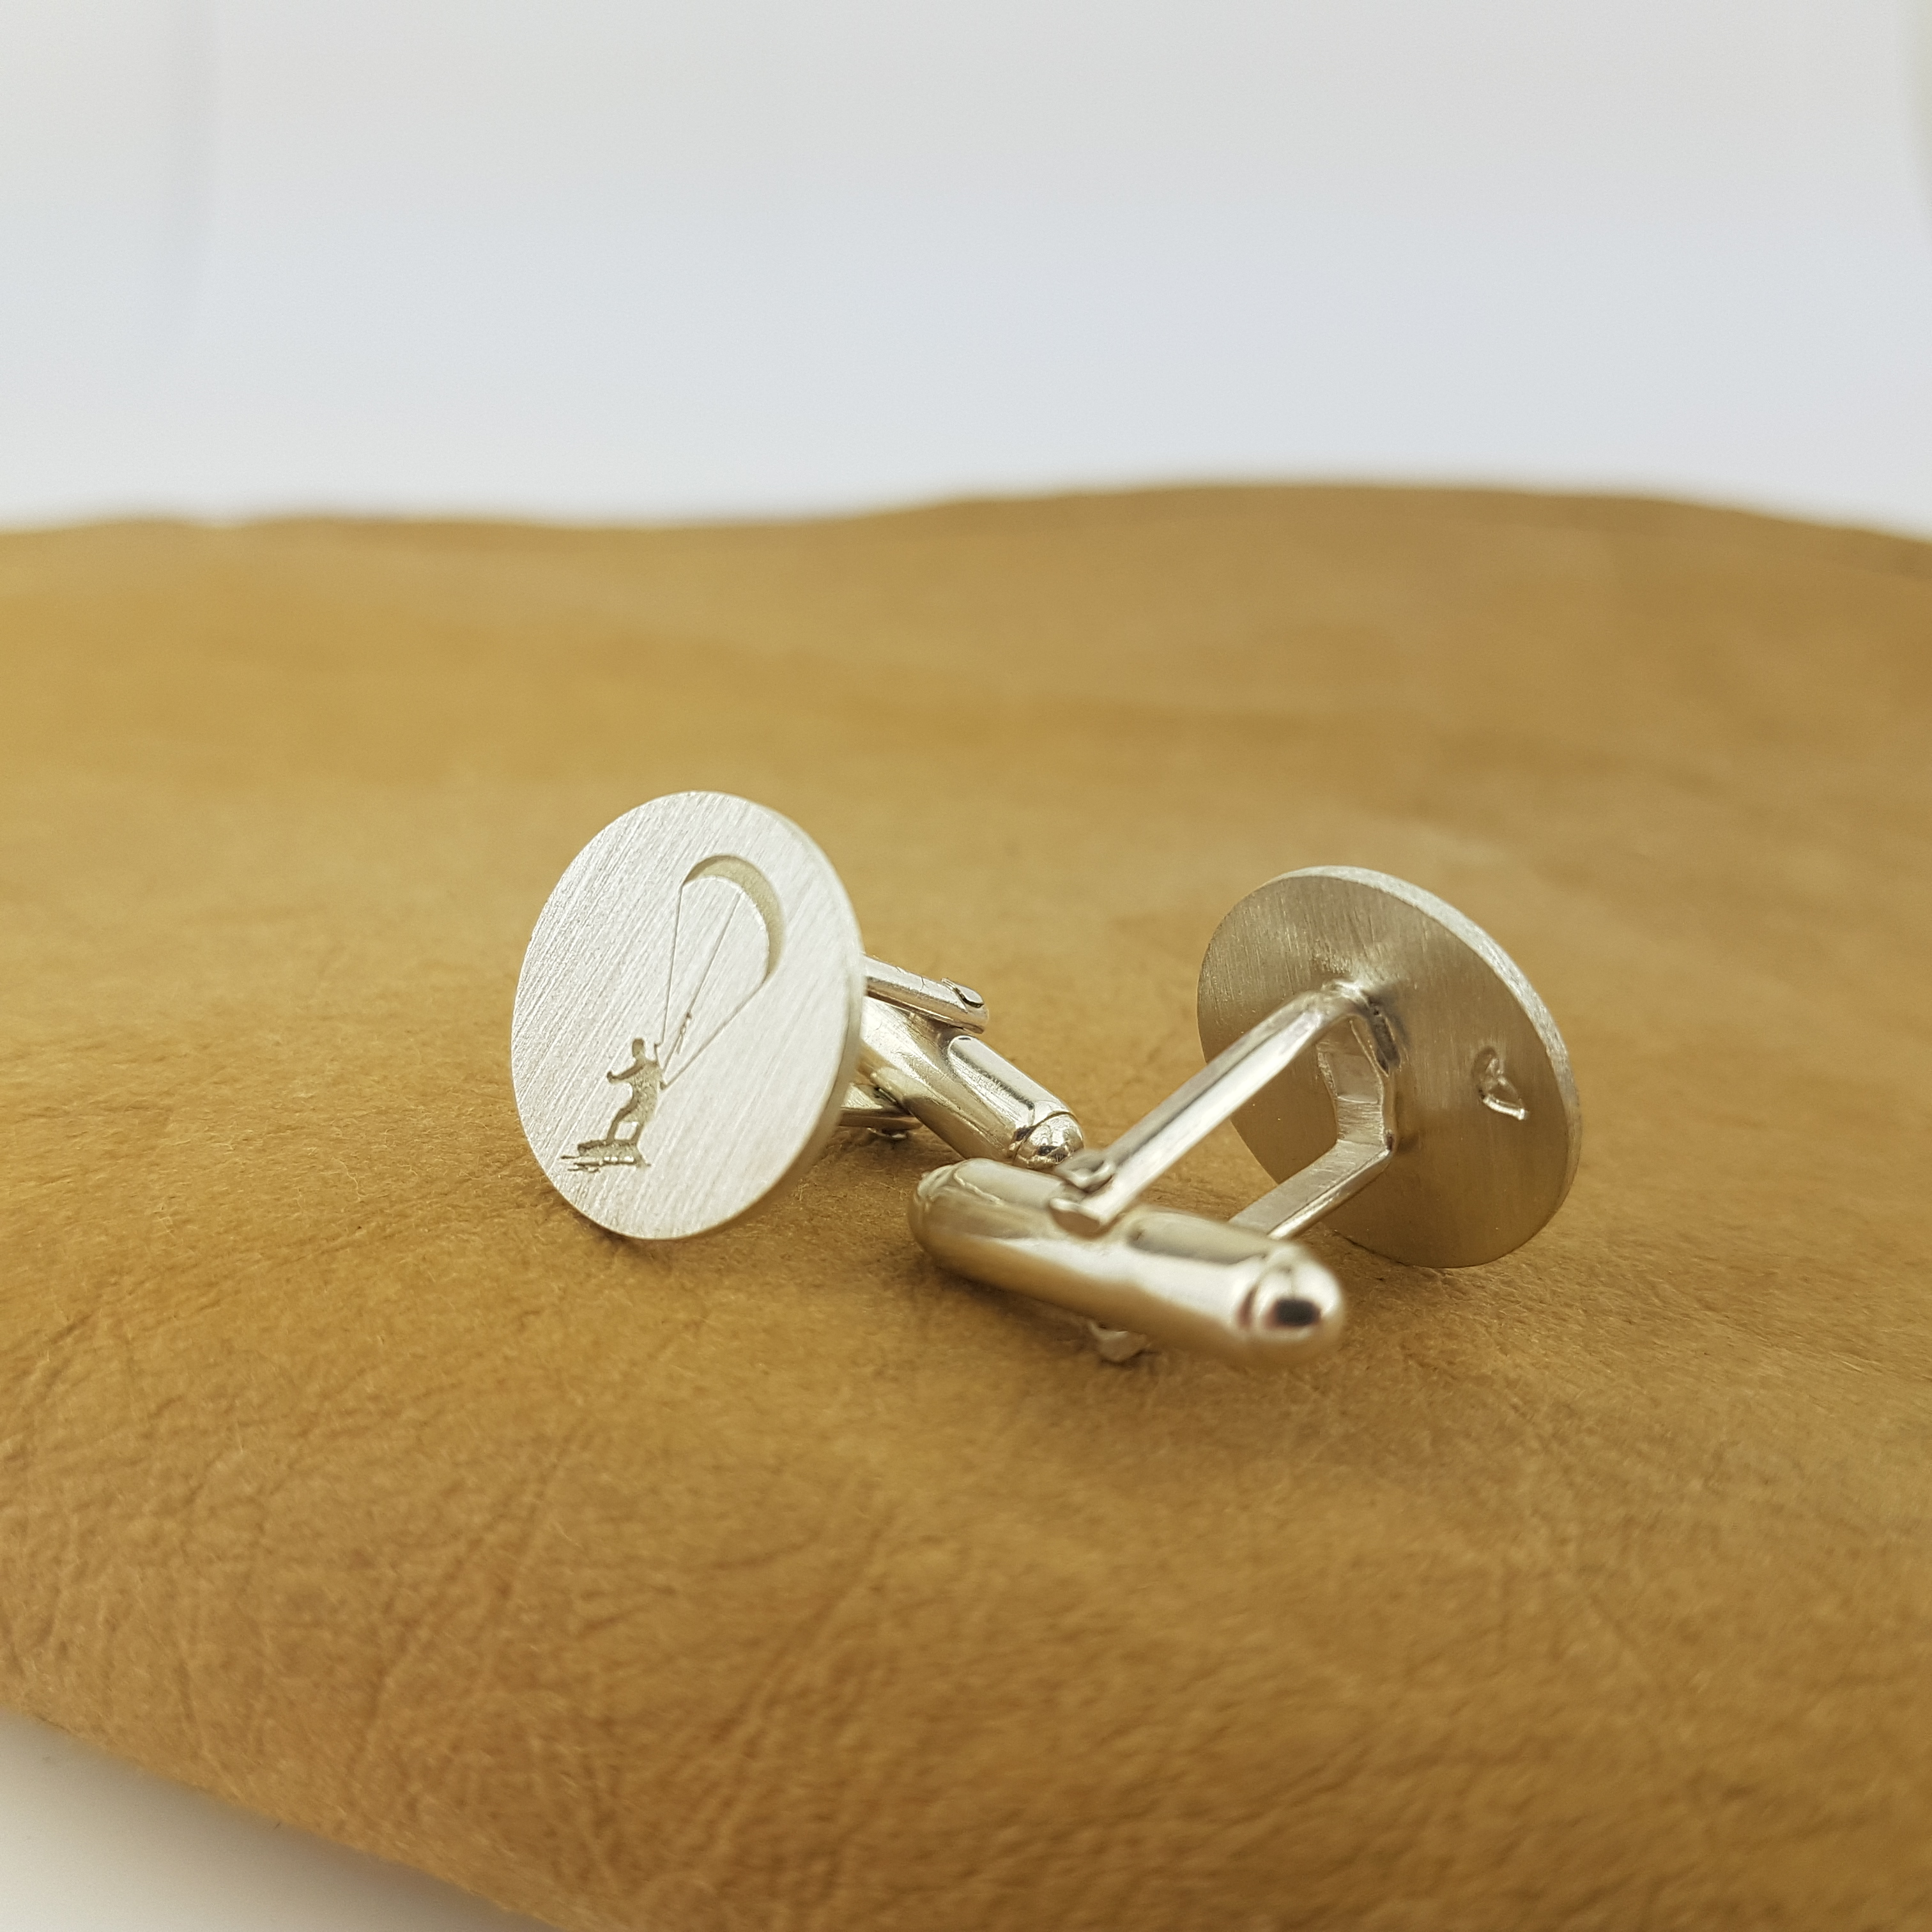 Custom Engraved Cufflinks - Silvery Jewellery - Personalised Jewellery Gifts online in Australia